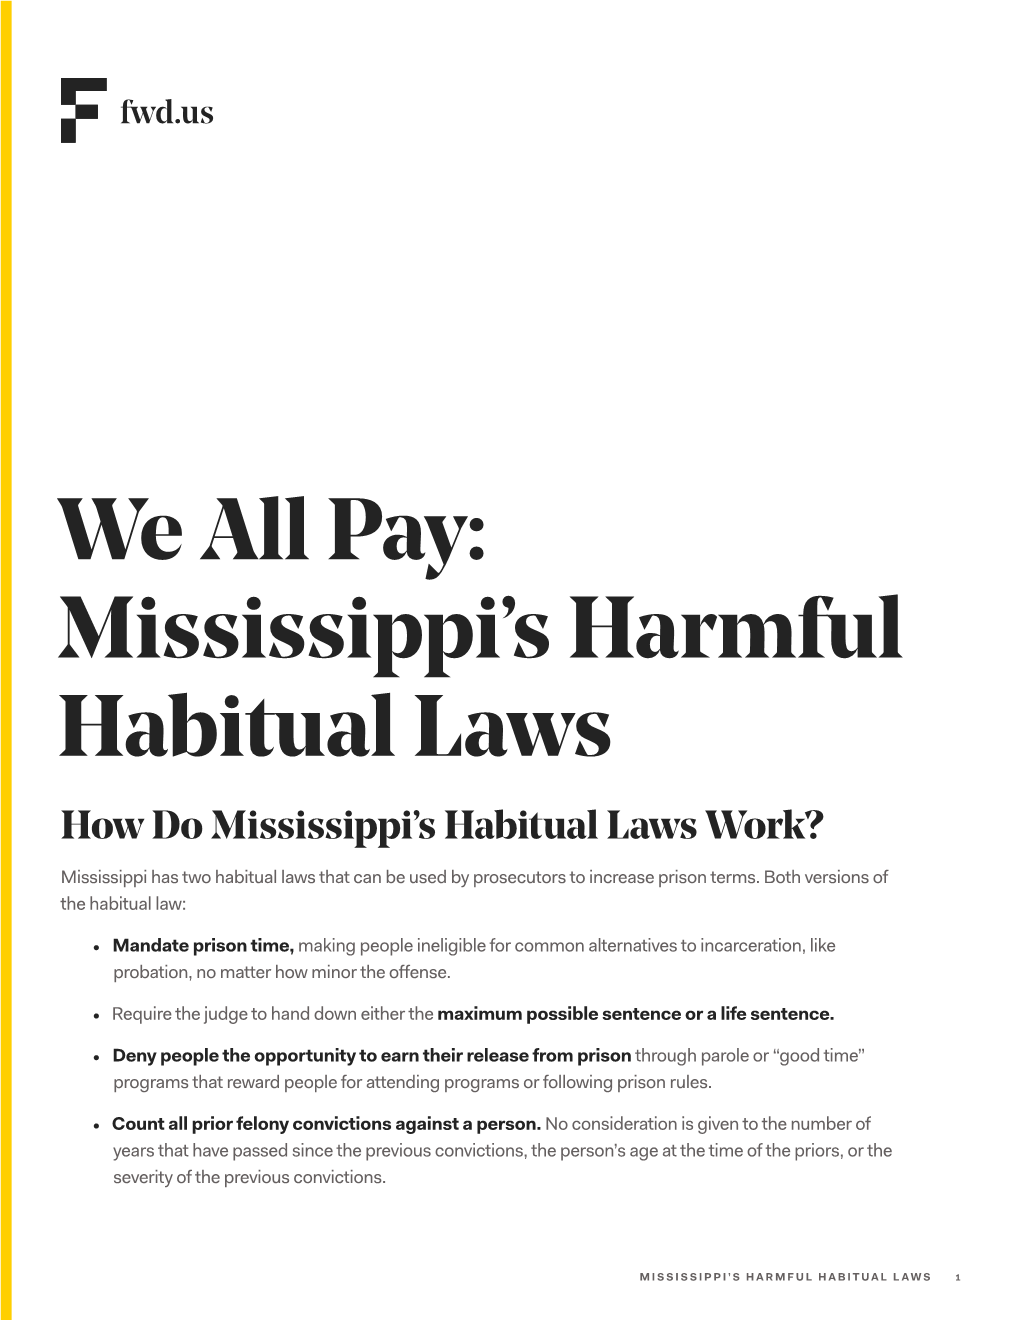 Mississippi's Harmful Habitual Laws